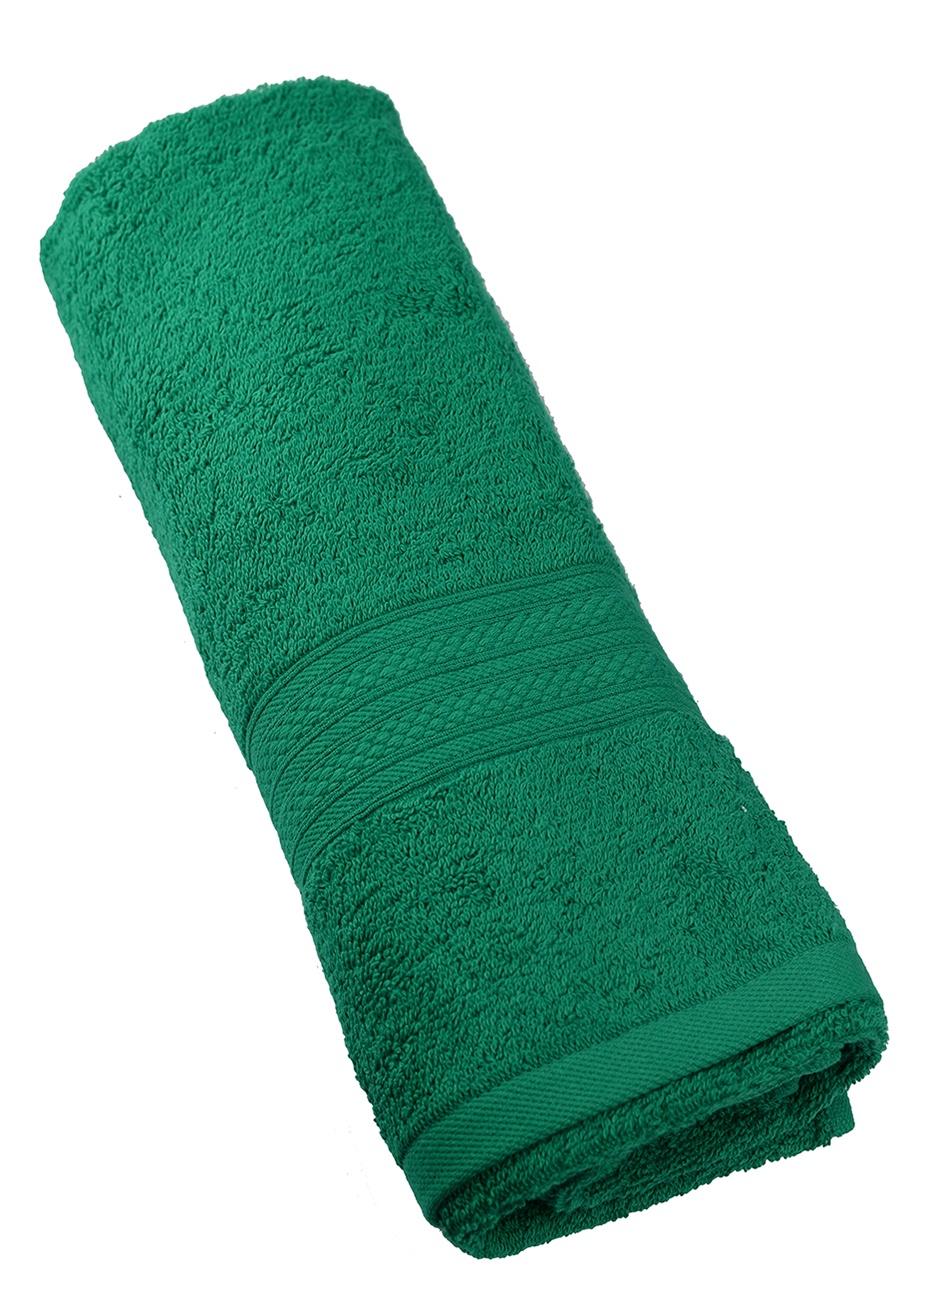 Полотенце махровое SEL, цвет: зеленый, 100х150 см